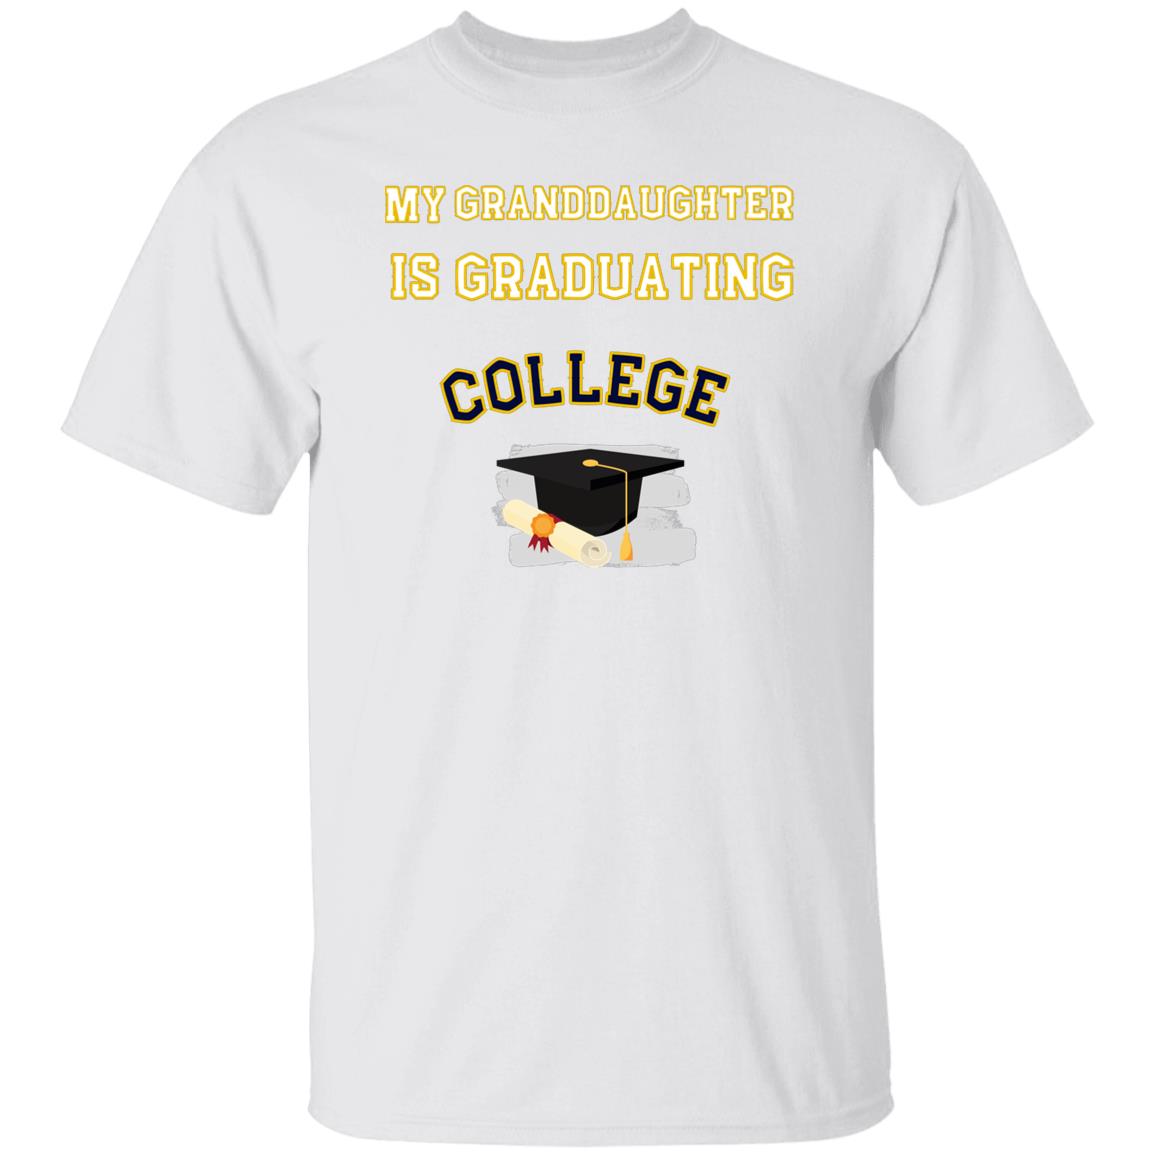 Granddaughter Graduating College T-Shirt